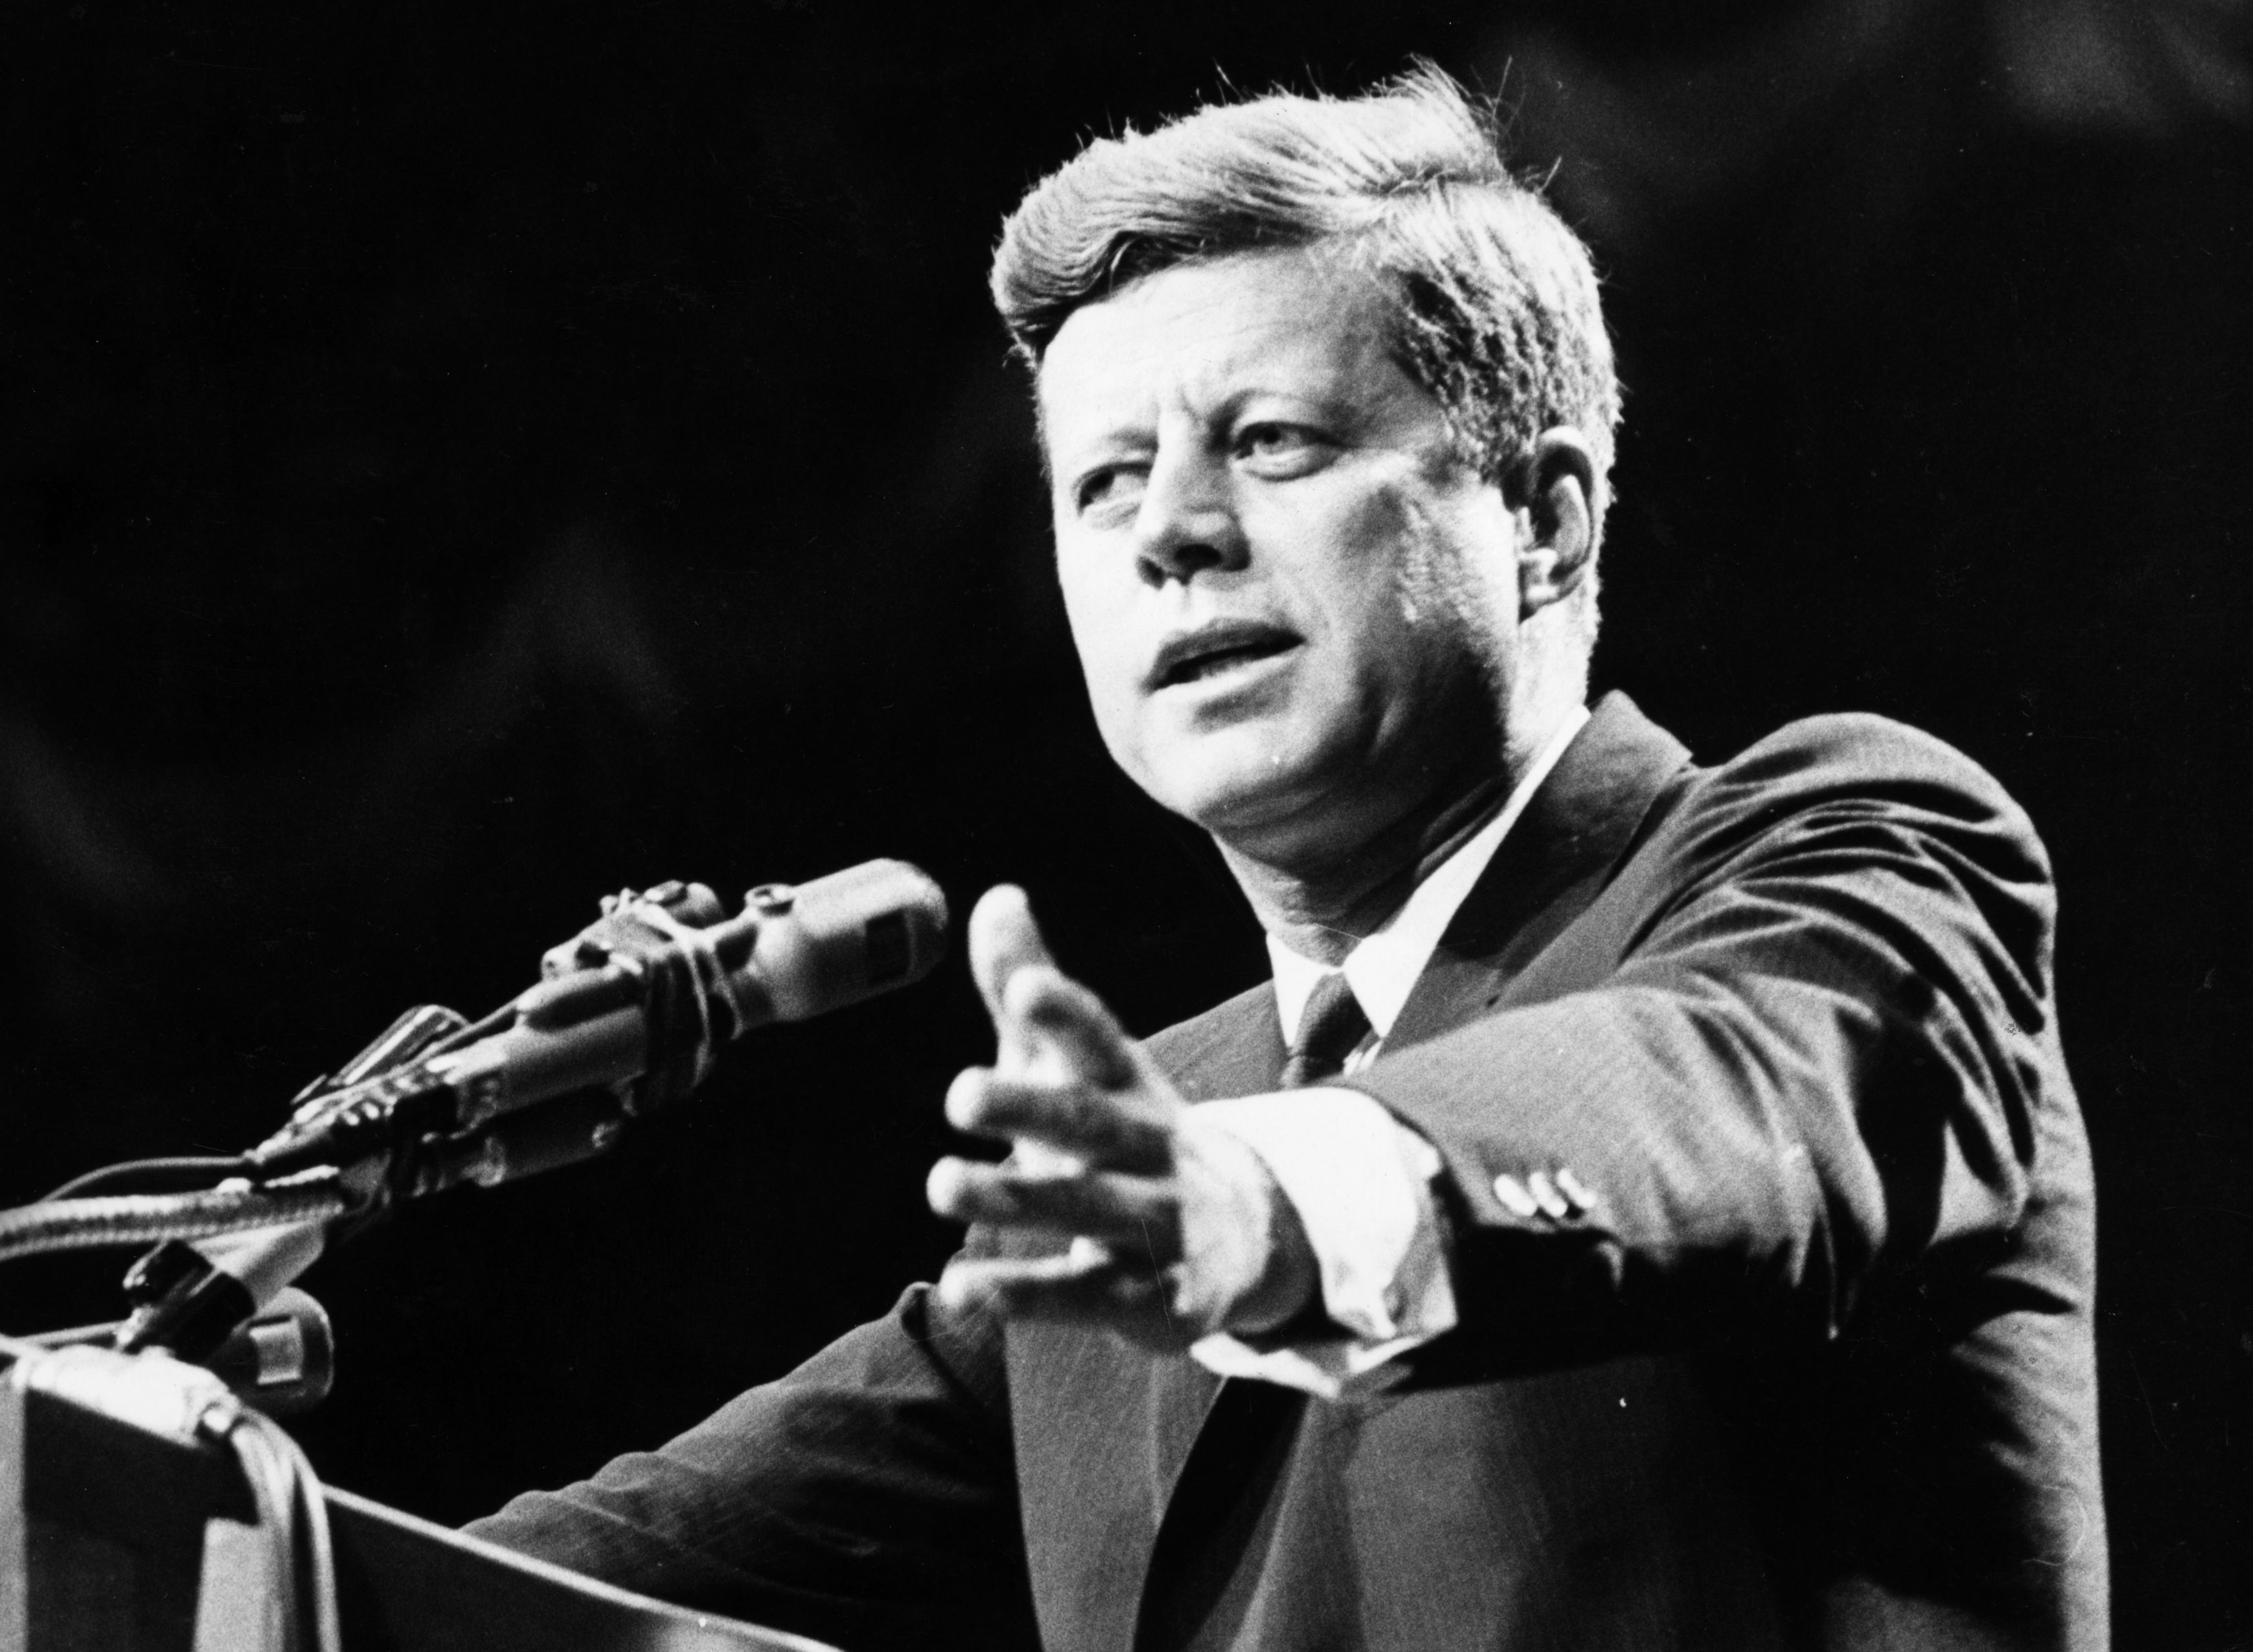 President John F. Kennedy at a podium